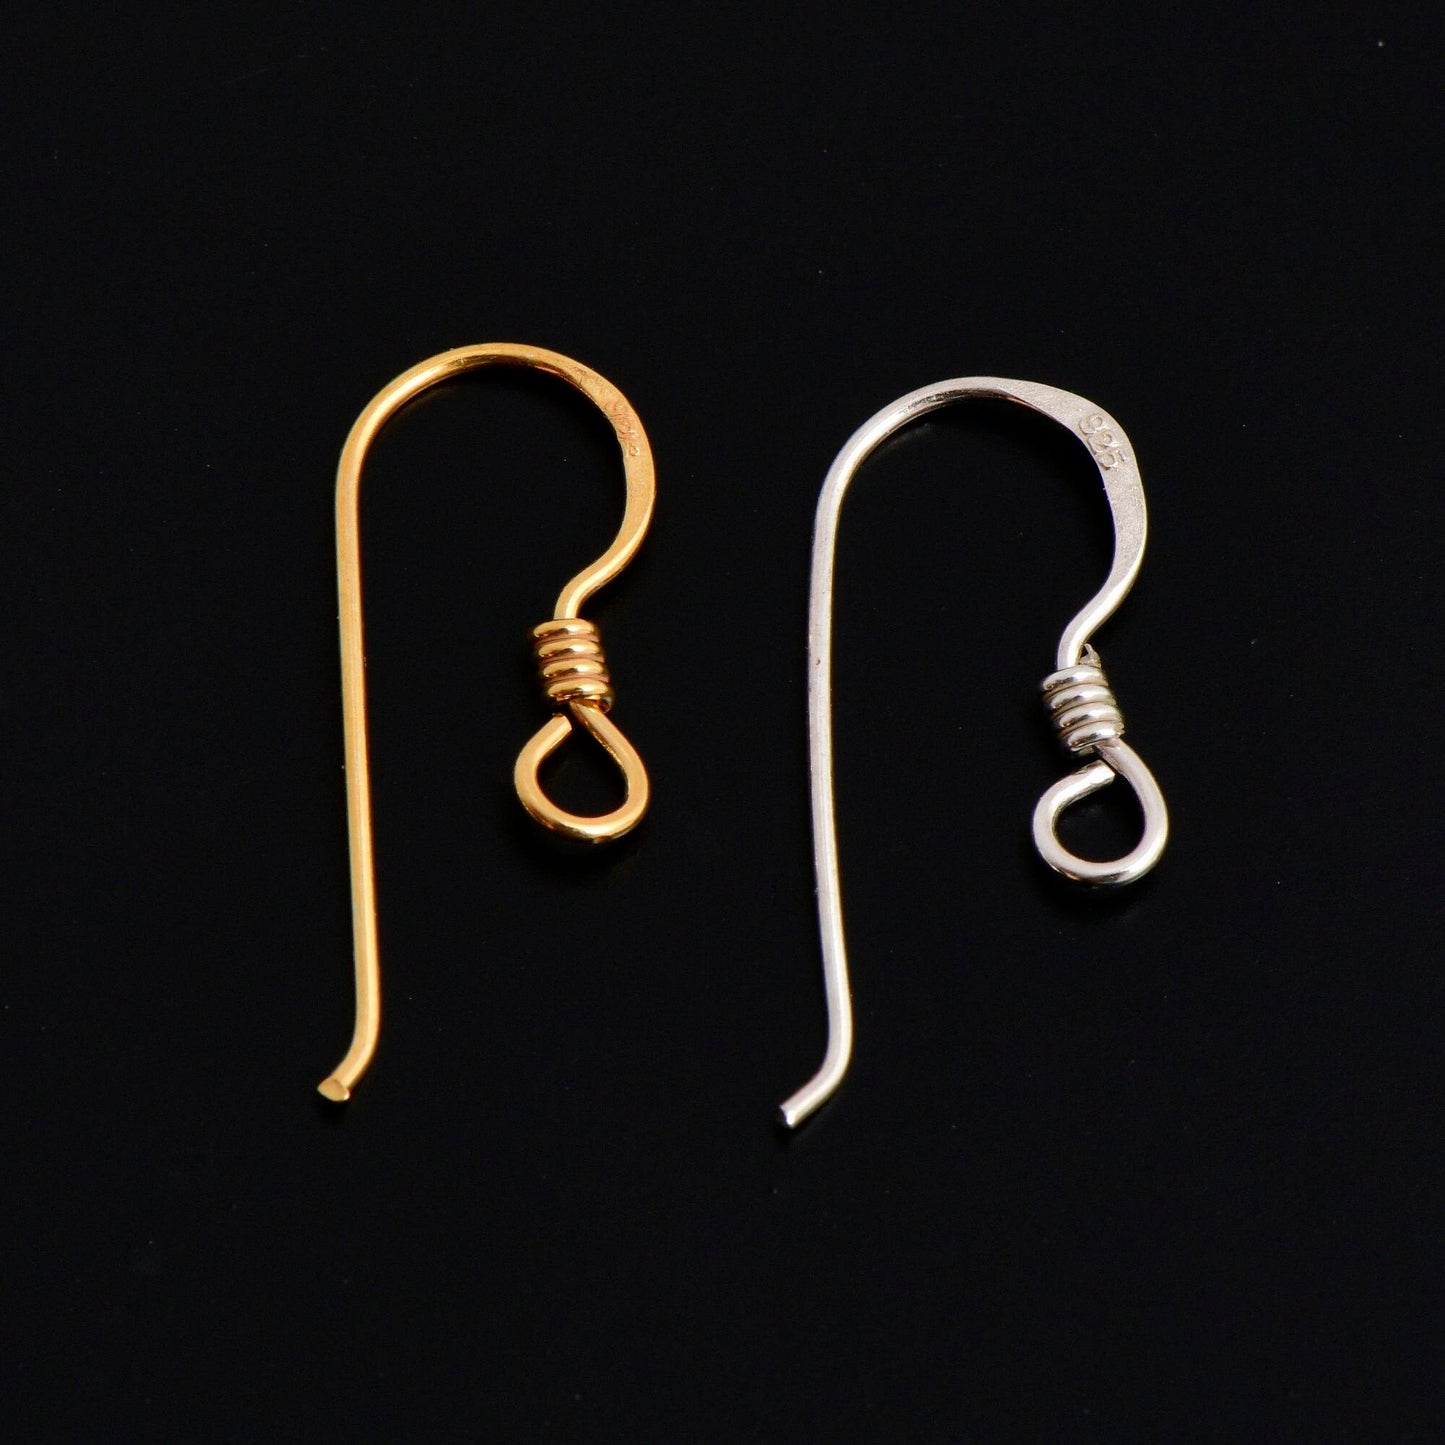 24K Gold Vermeil Economical Ear Wires, Sterling Silver Earring Hooks in 24K Gold, Ball Ear Wires, Earrings Making Supply, S40V/ S40